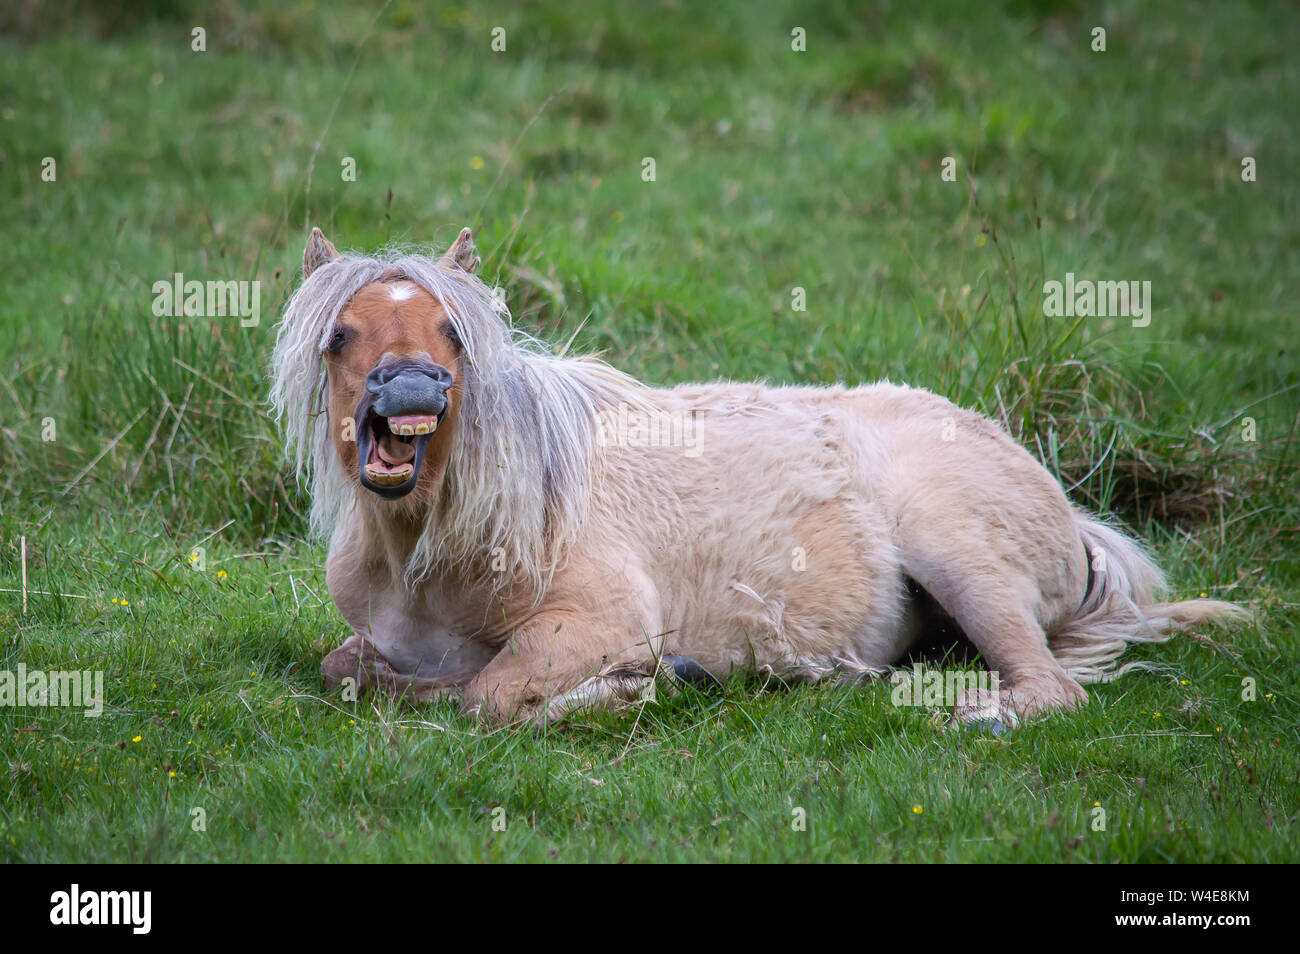 Wild pony having a laugh Stock Photo